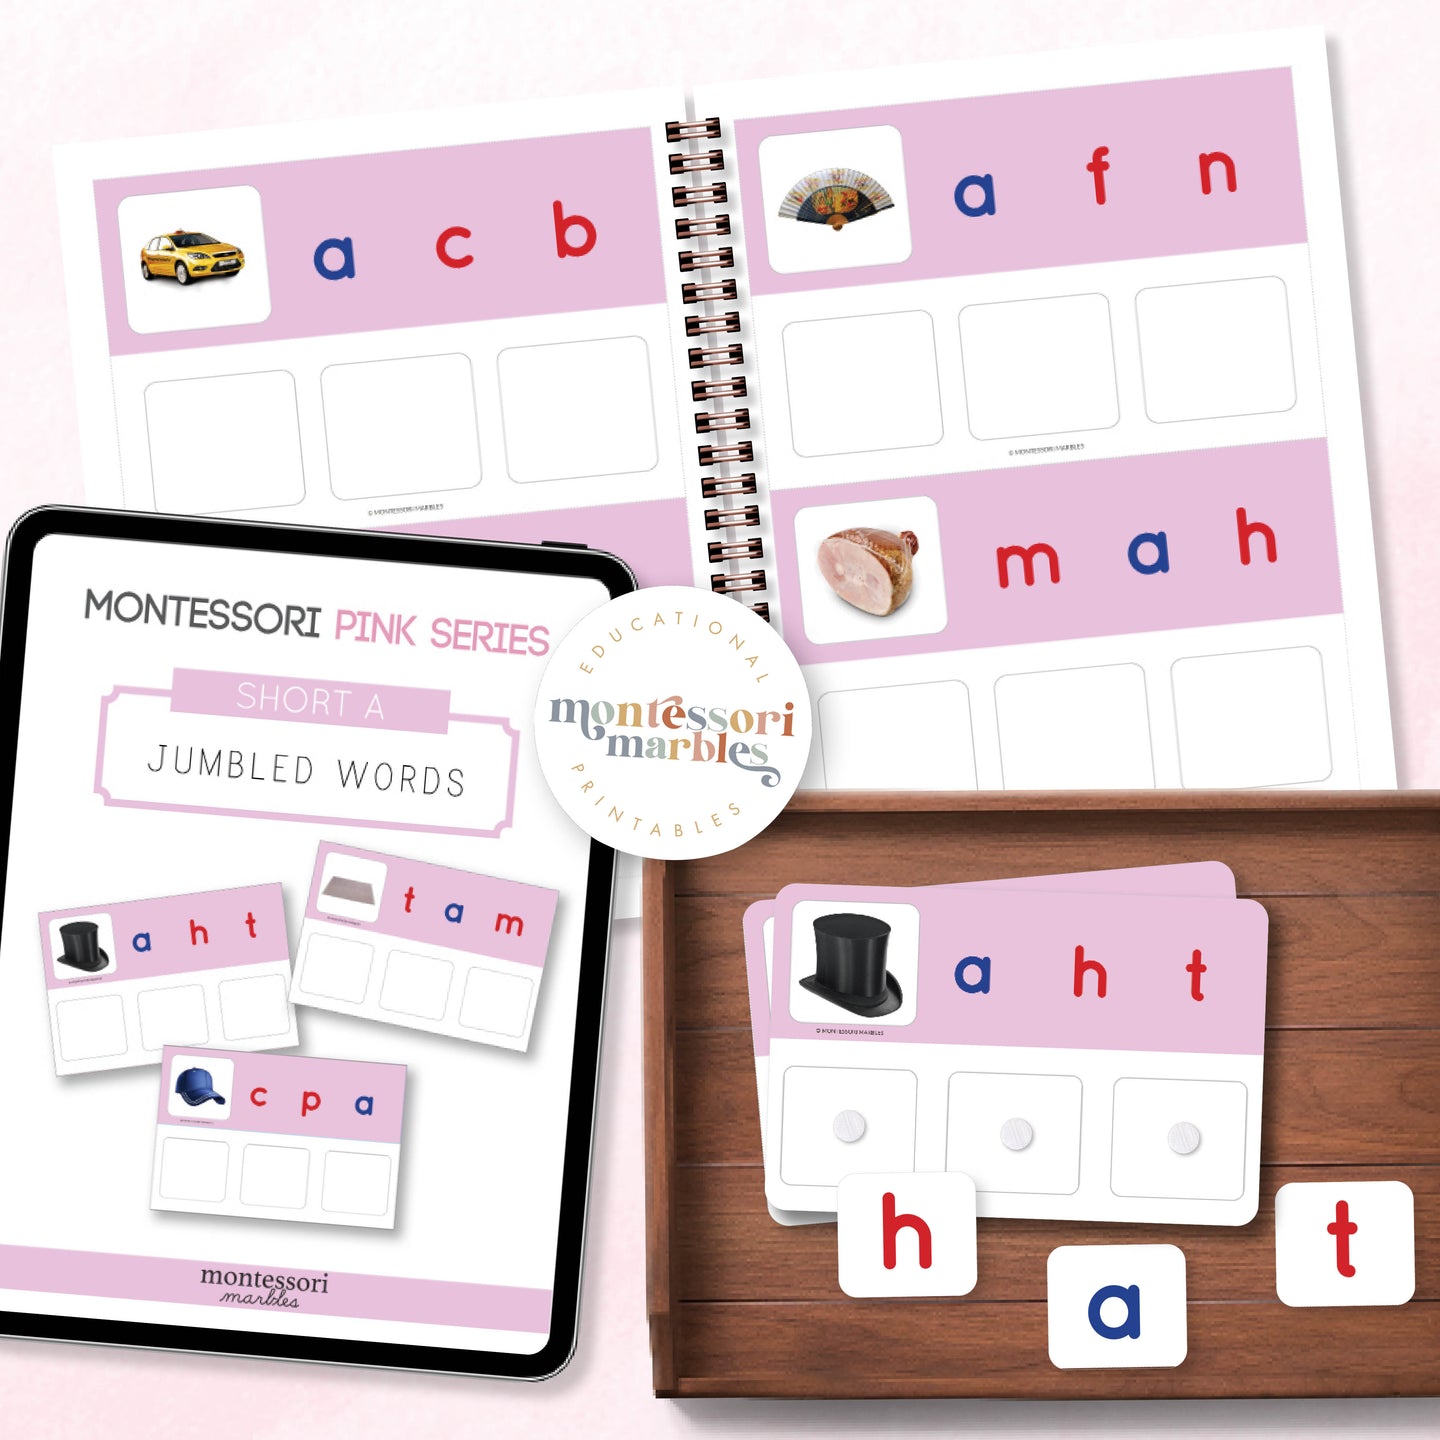 Montessori Pink Series Jumbled Words for Short 